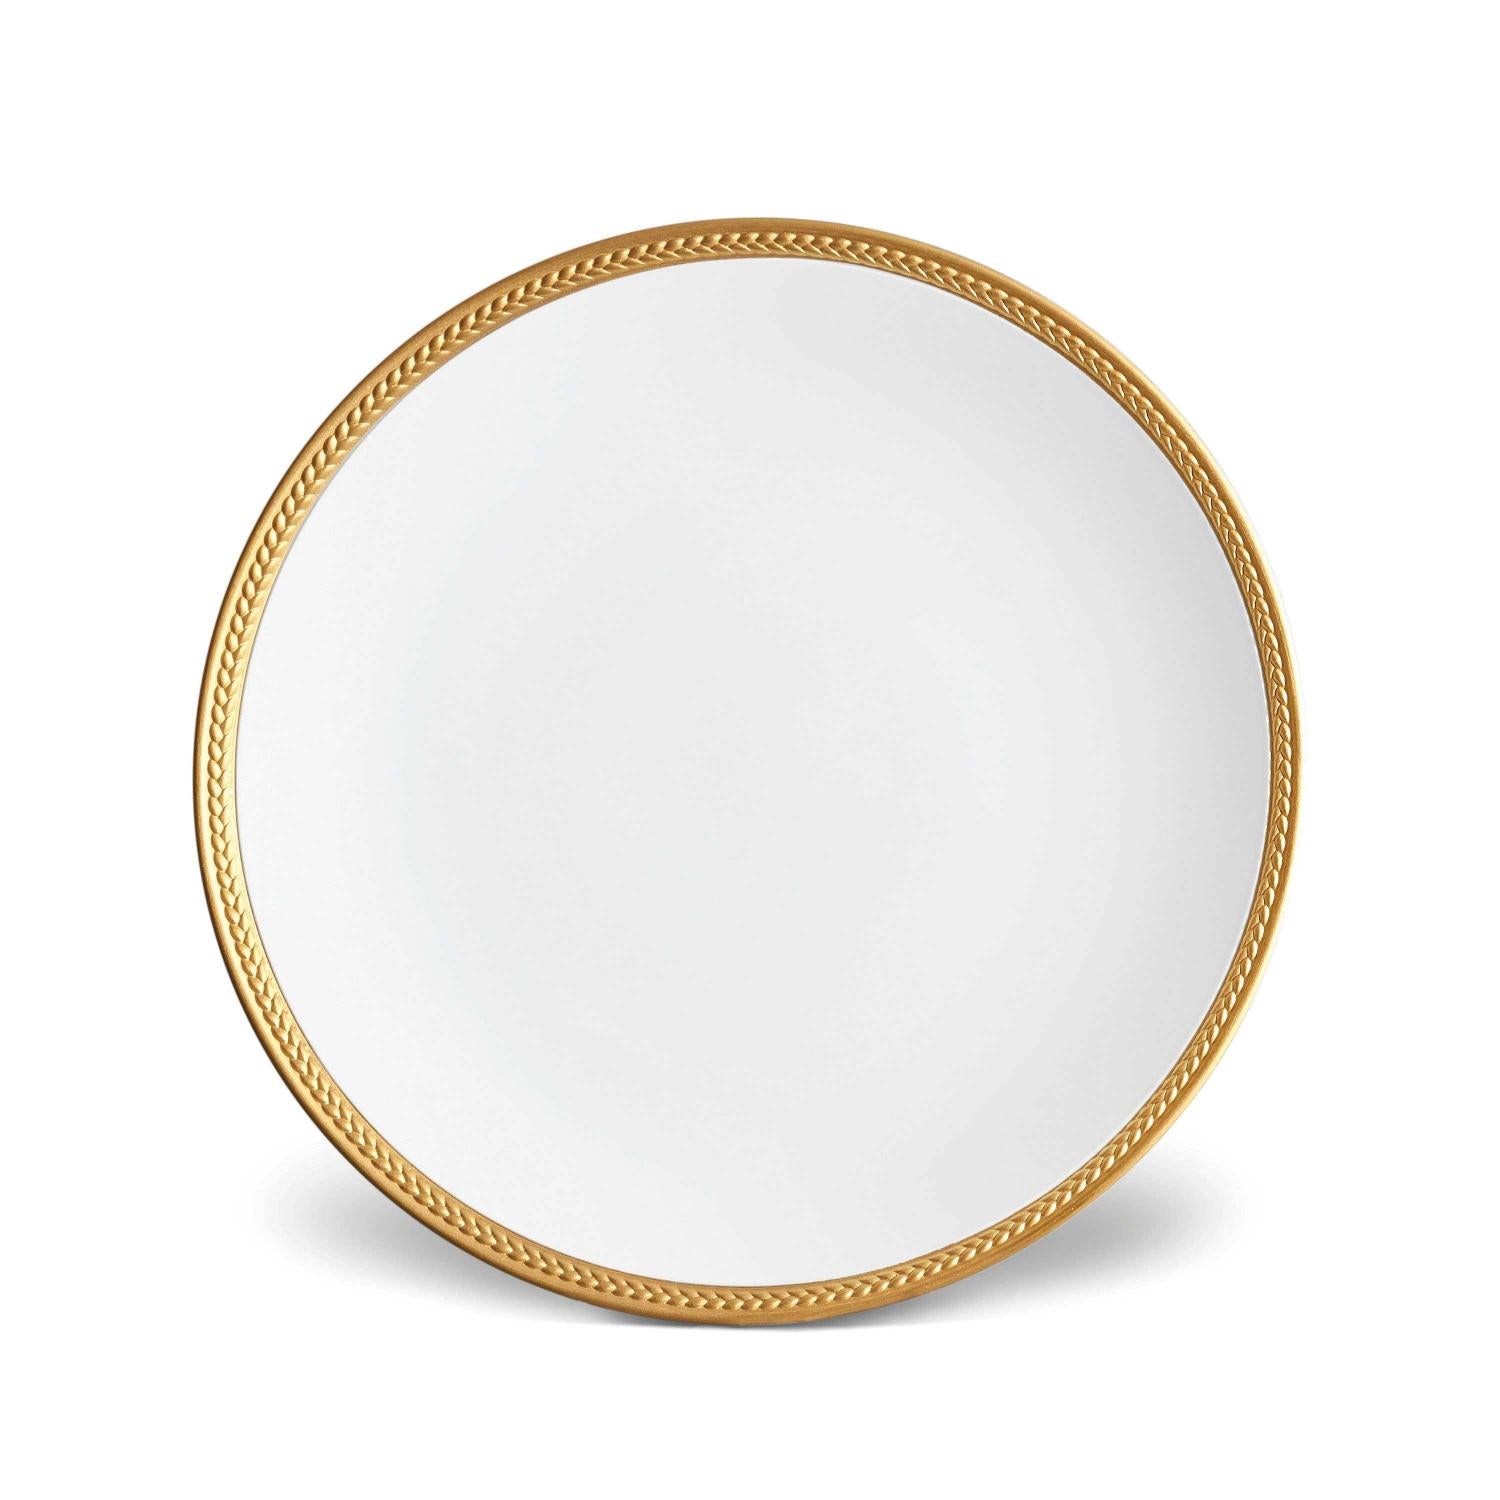 Soie Tressee Dinner Plate - Gold